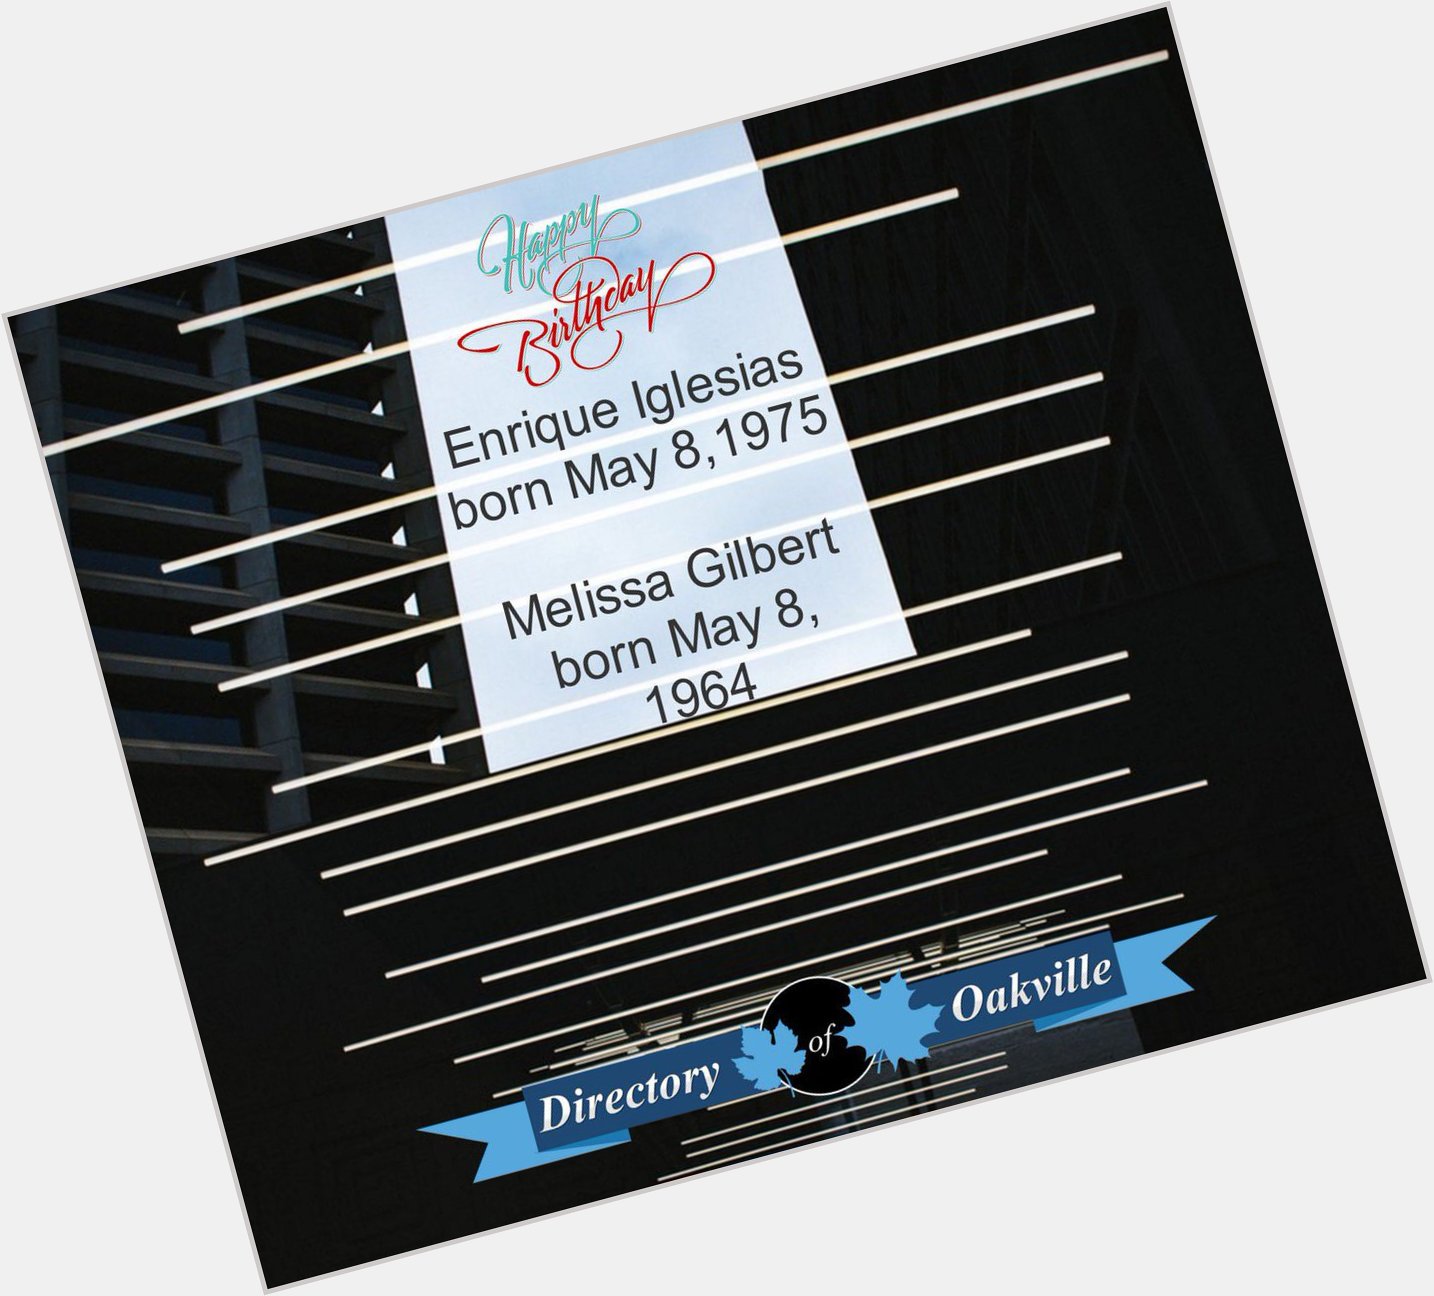 Happy Birthday! 

Enrique Iglesias born, May 8, 1975
Melissa Gilbert born, May 8, 1964 